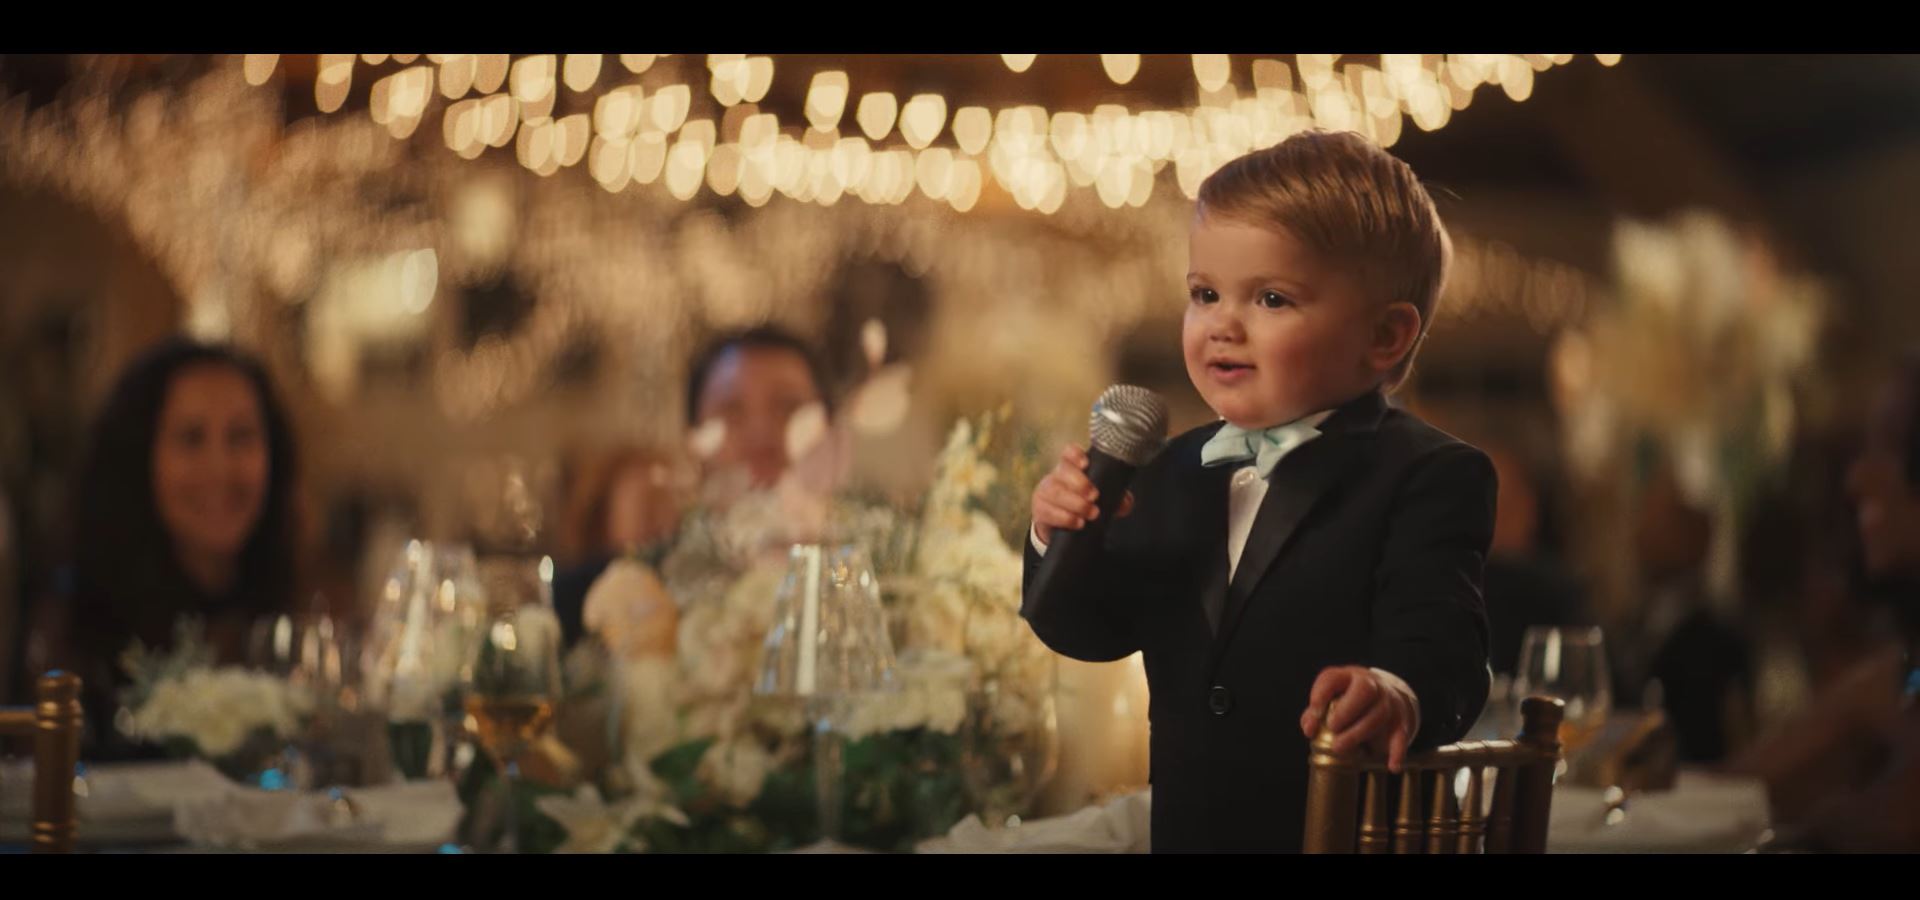 E*TRADE Super Bowl ad 2023 - Baby at Wedding